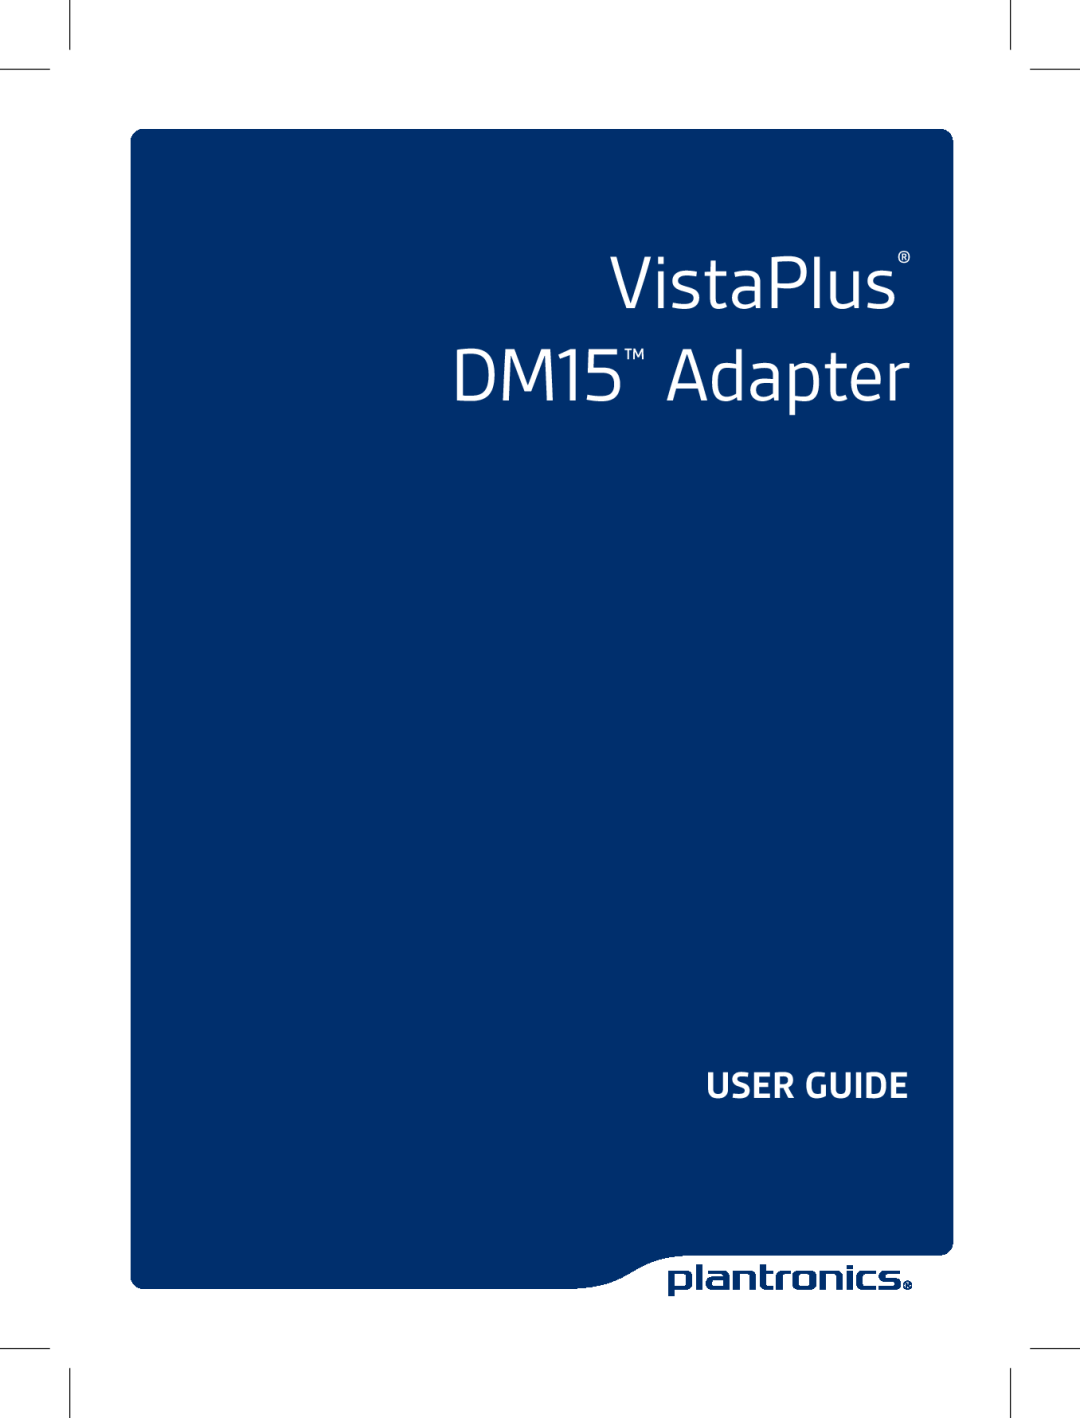 Plantronics manual VistaPlus DM15 Adapter, User Guide 